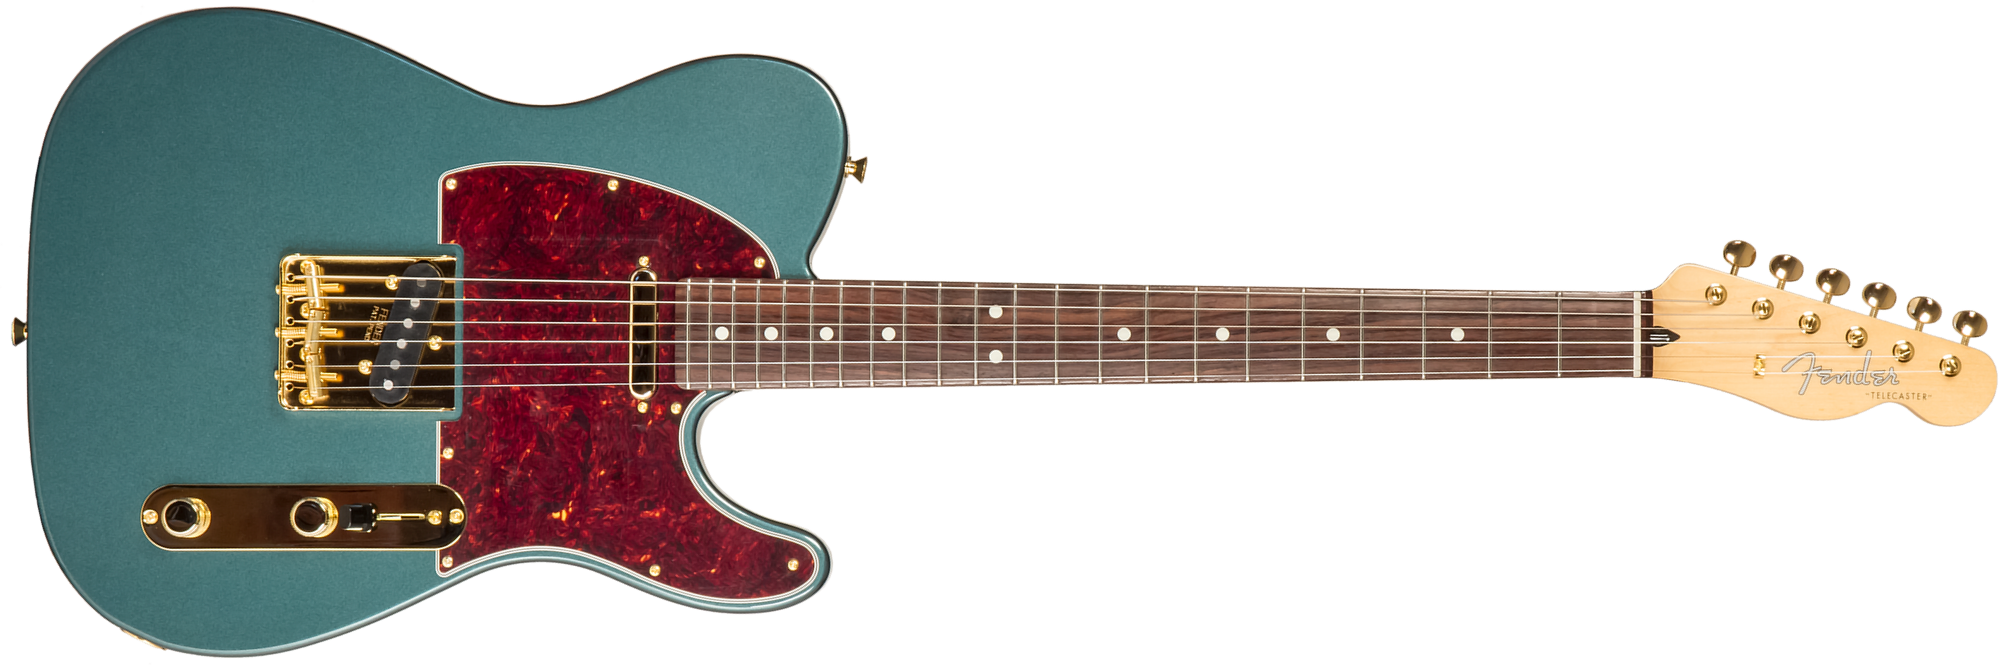 Fender Tele Hybrid Ii Jap 2s Ht Rw - Sherwood Green Metallic - Televorm elektrische gitaar - Main picture